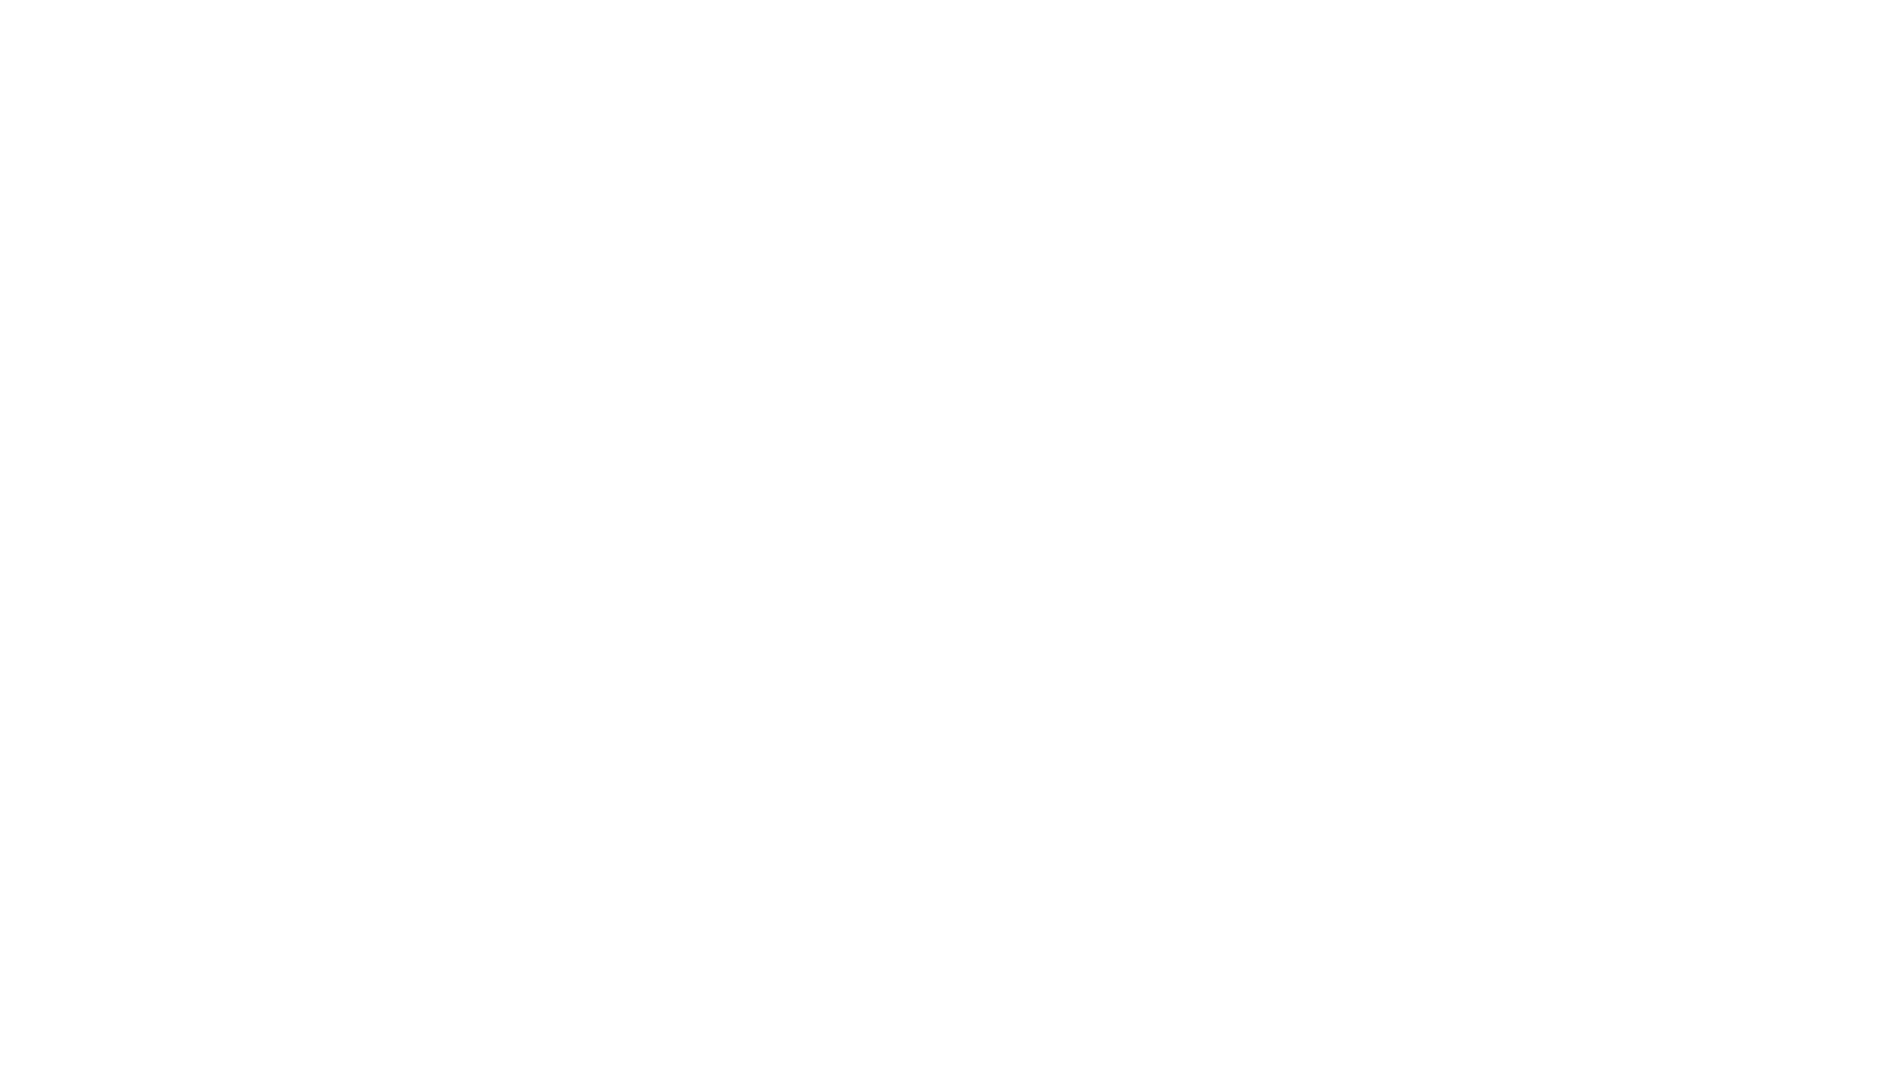 One Crazy Summer logo